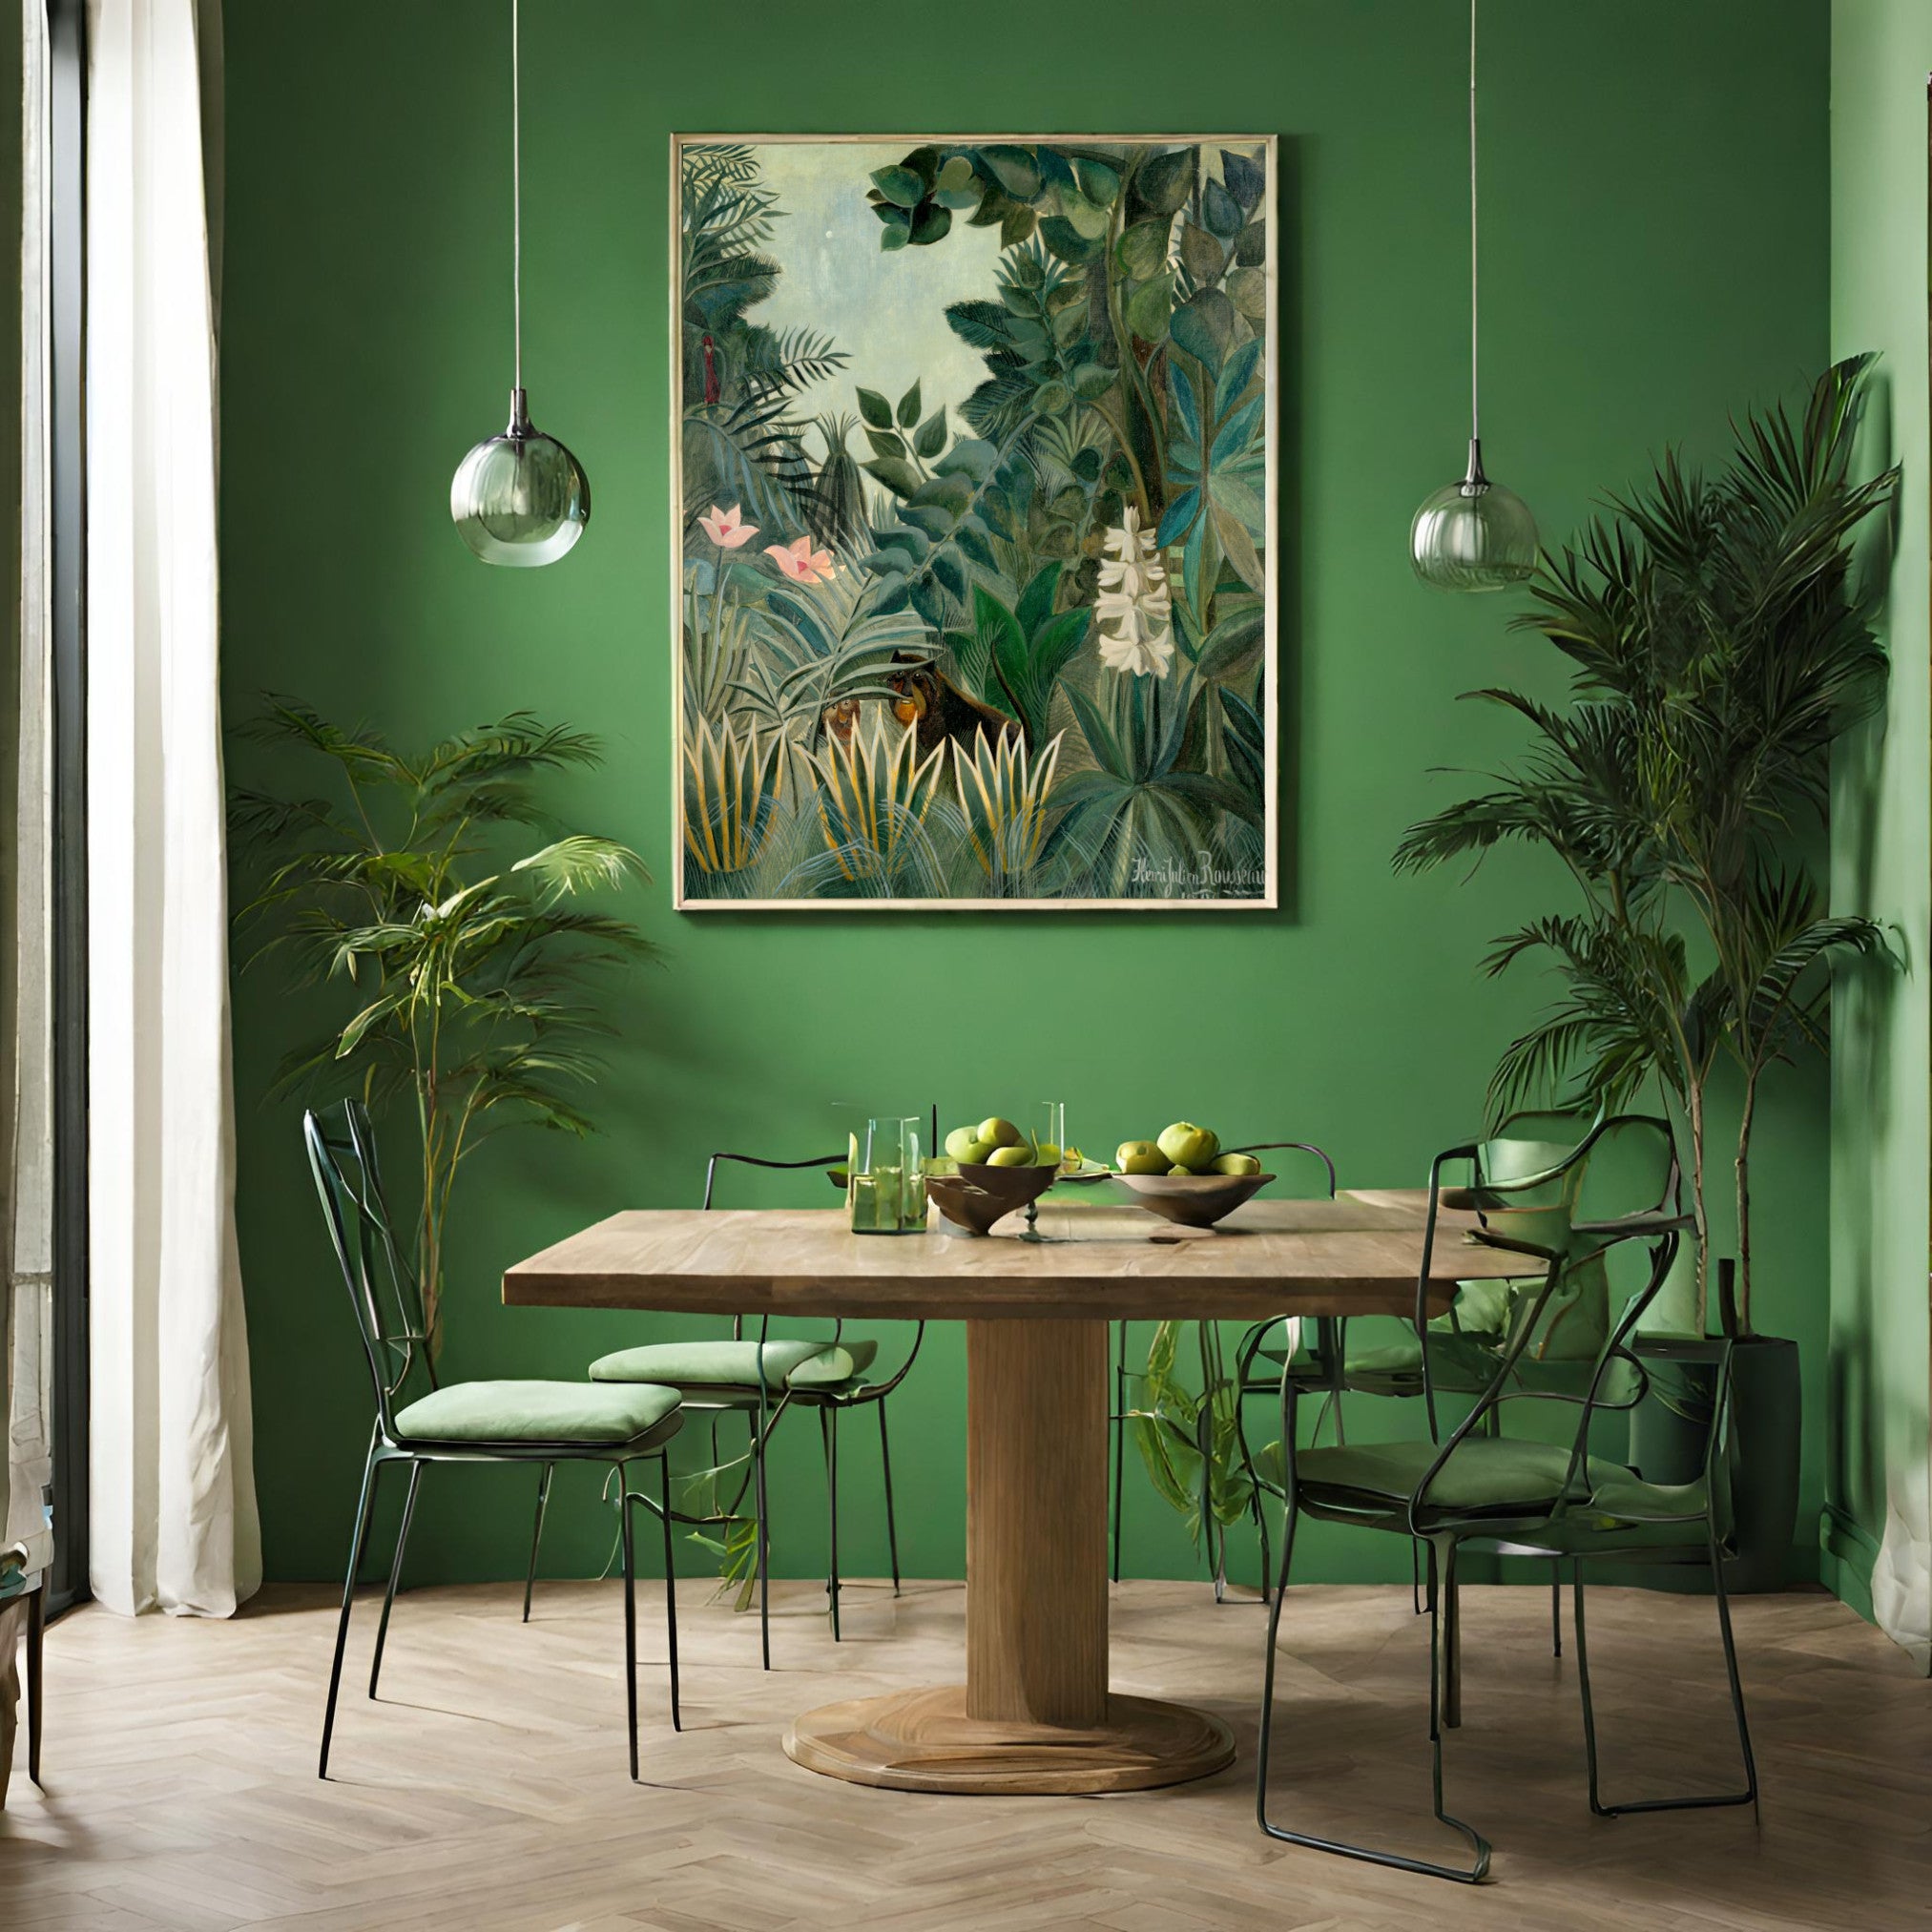 Henri Rousseau print in green dining room